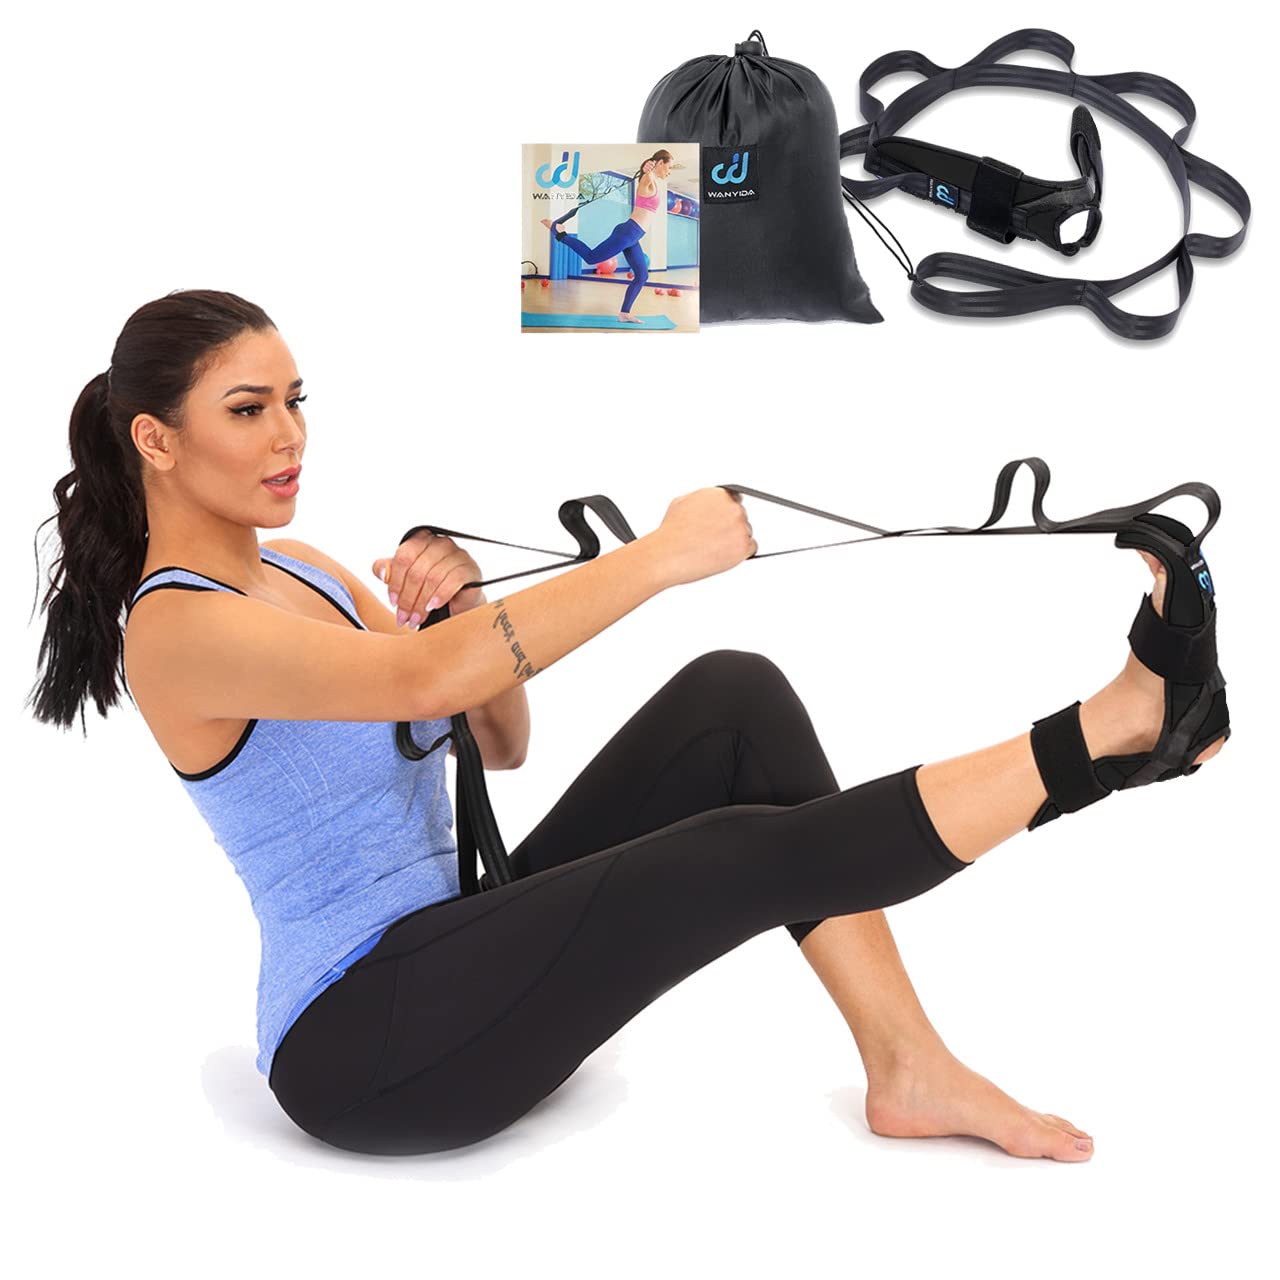 Orthomen Foot Stretcher Belt for Plantar Fasciitis and Yoga, Black